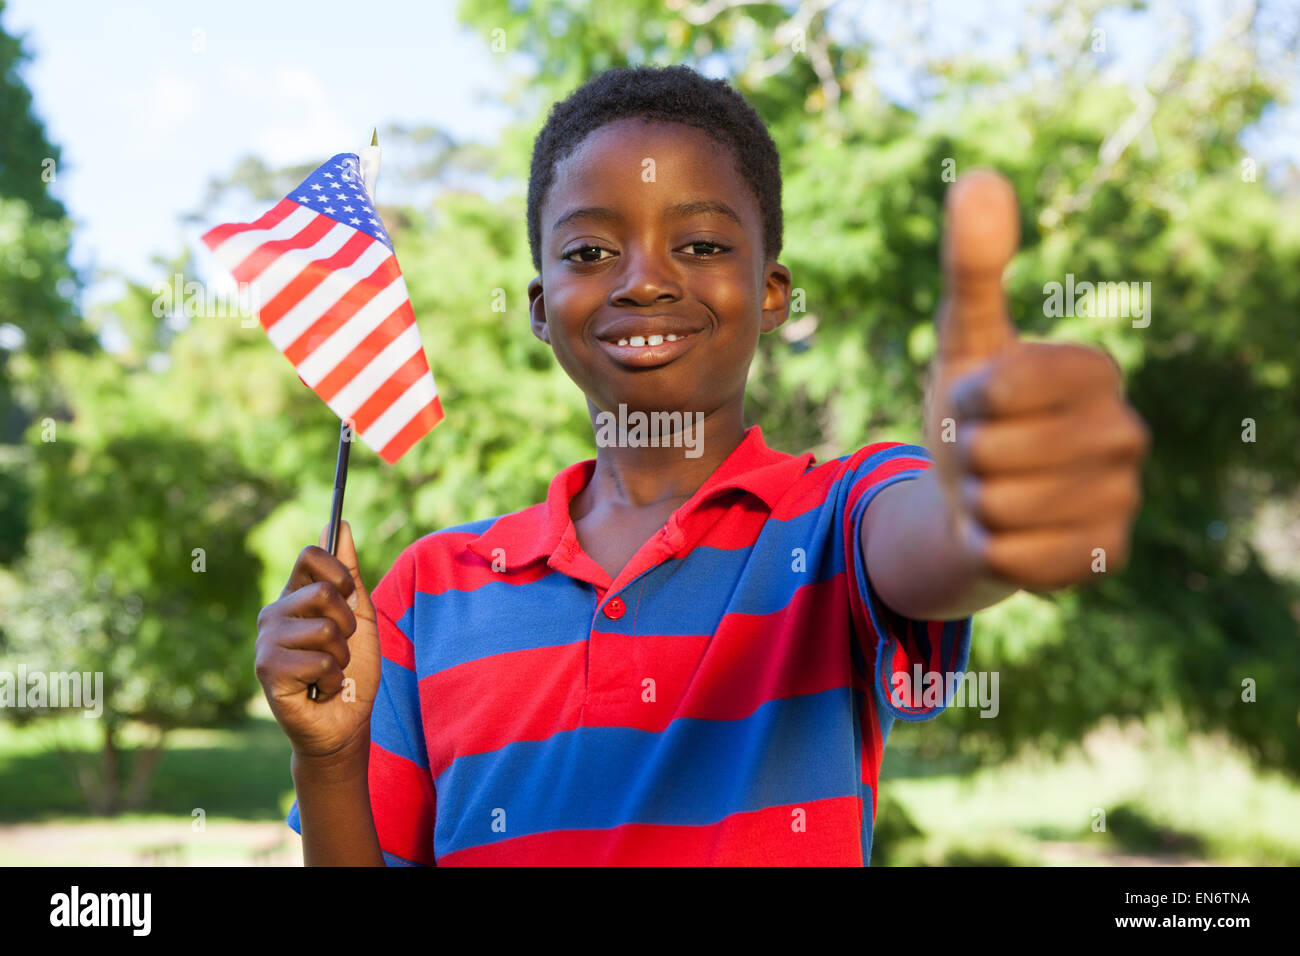 Little boy waving american flag Stock Photo